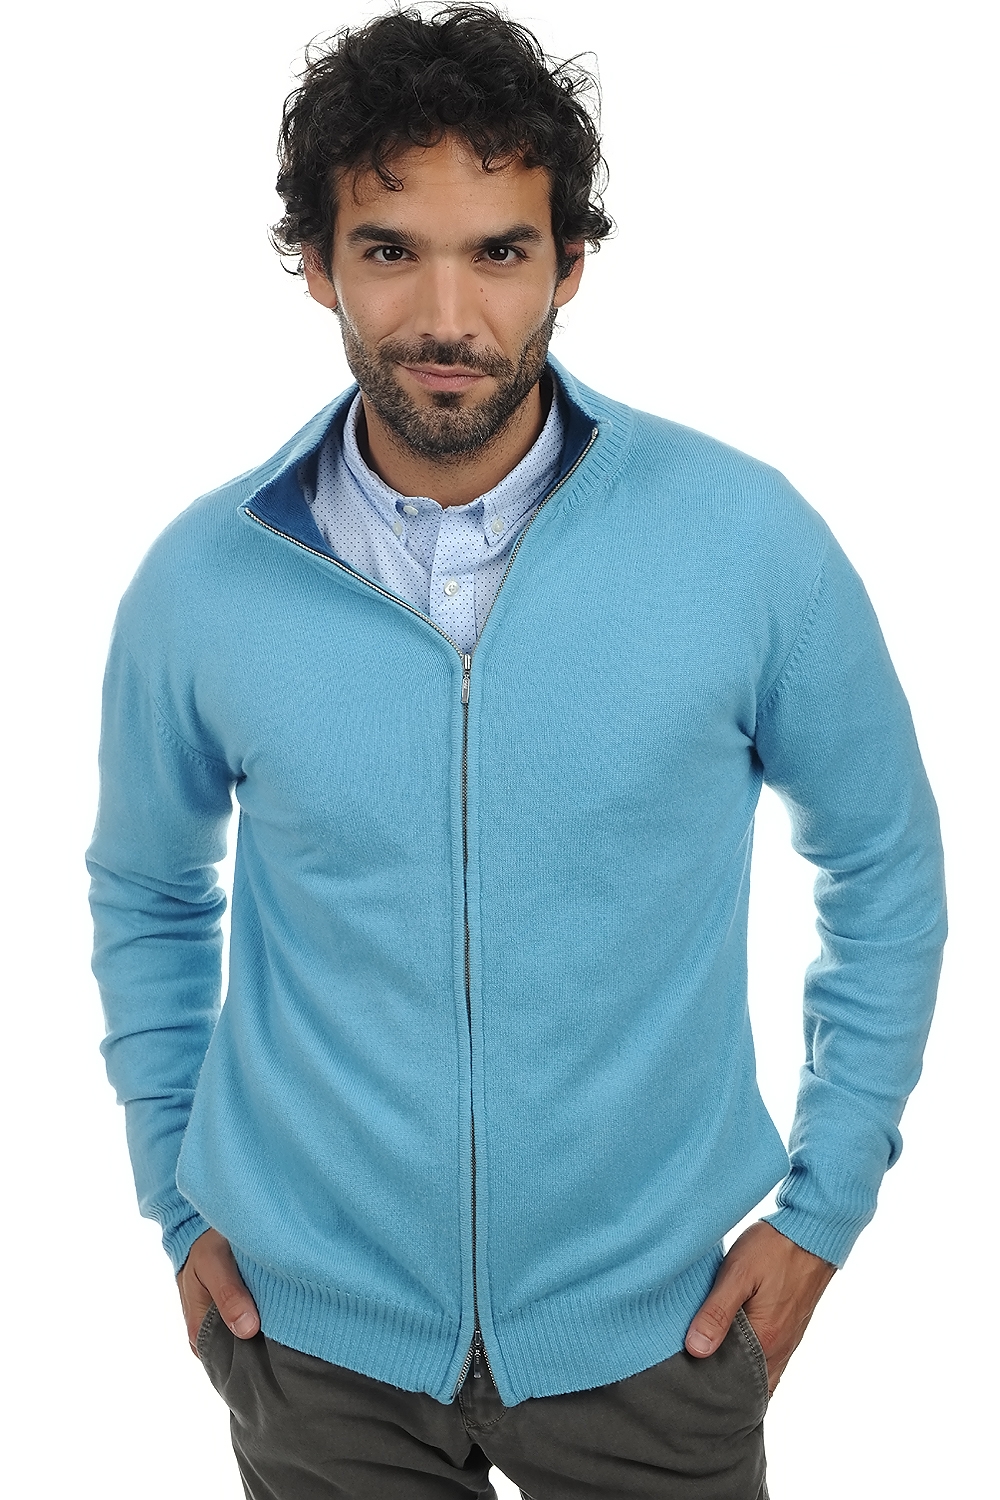 Cashmere men waistcoat sleeveless sweaters ronald teal blue canard blue 2xl